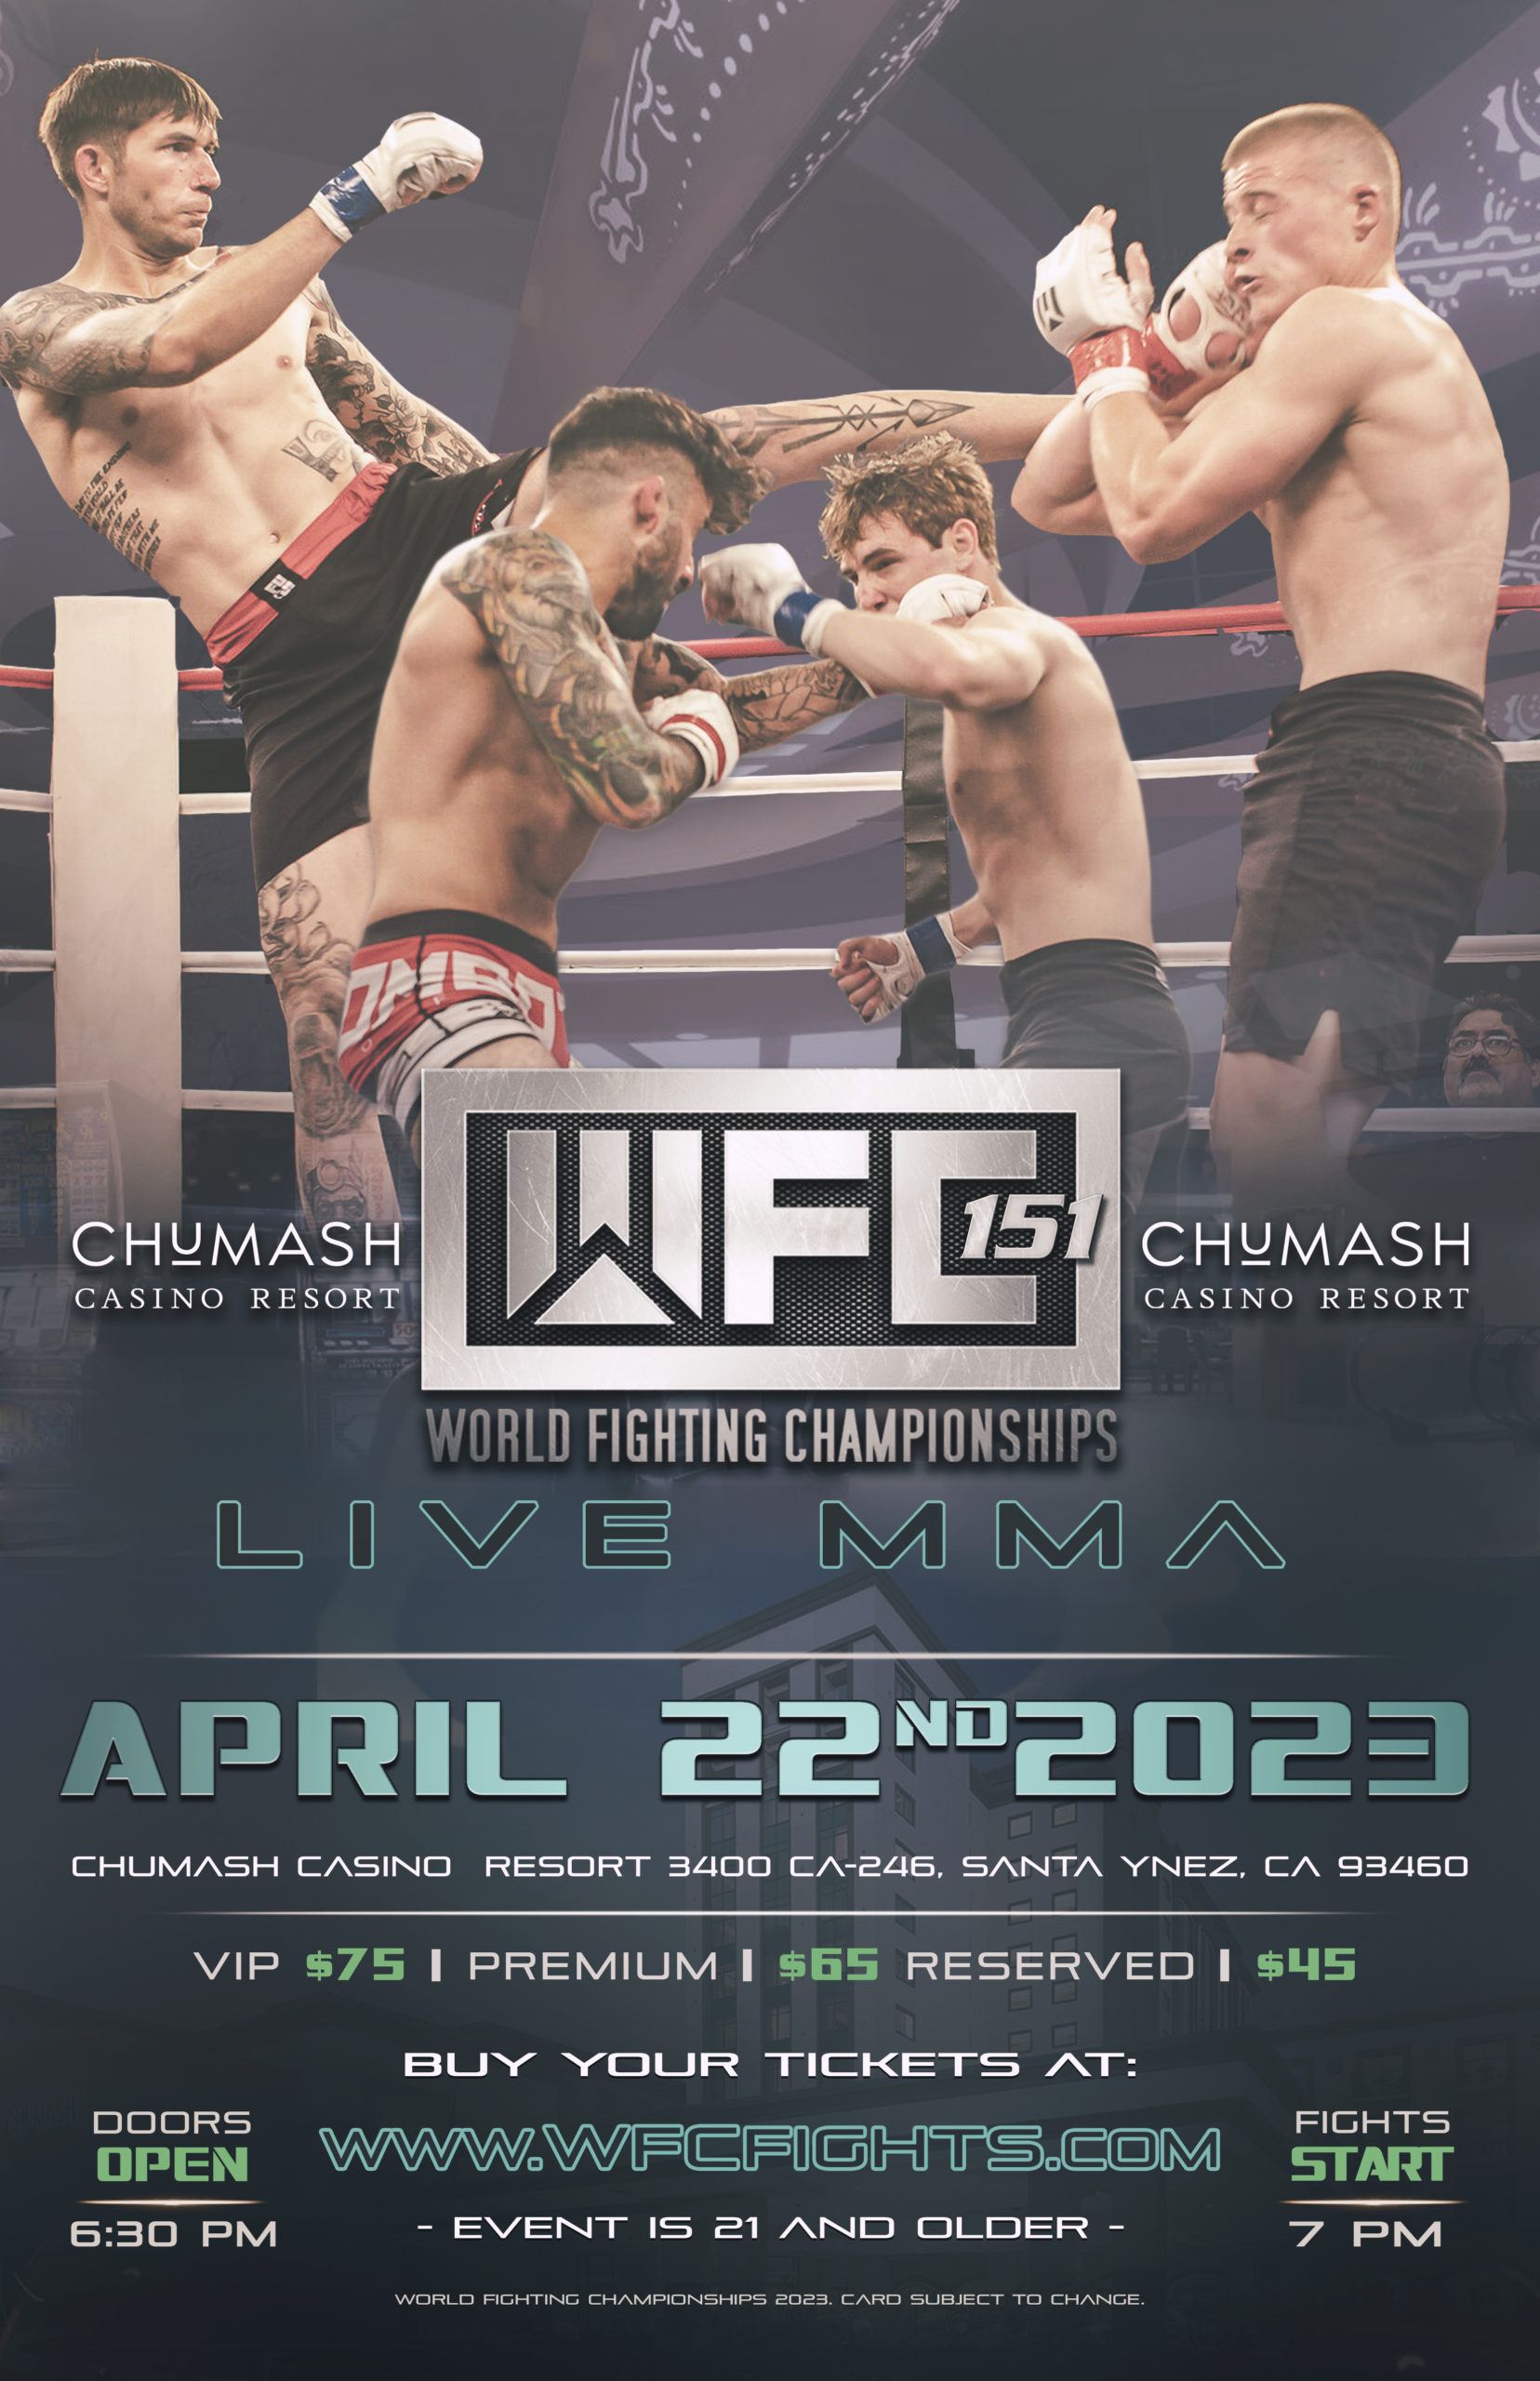 WFC 151 LIVE MMA and Kickboxing April 22nd, 2023 at Chumash Casino